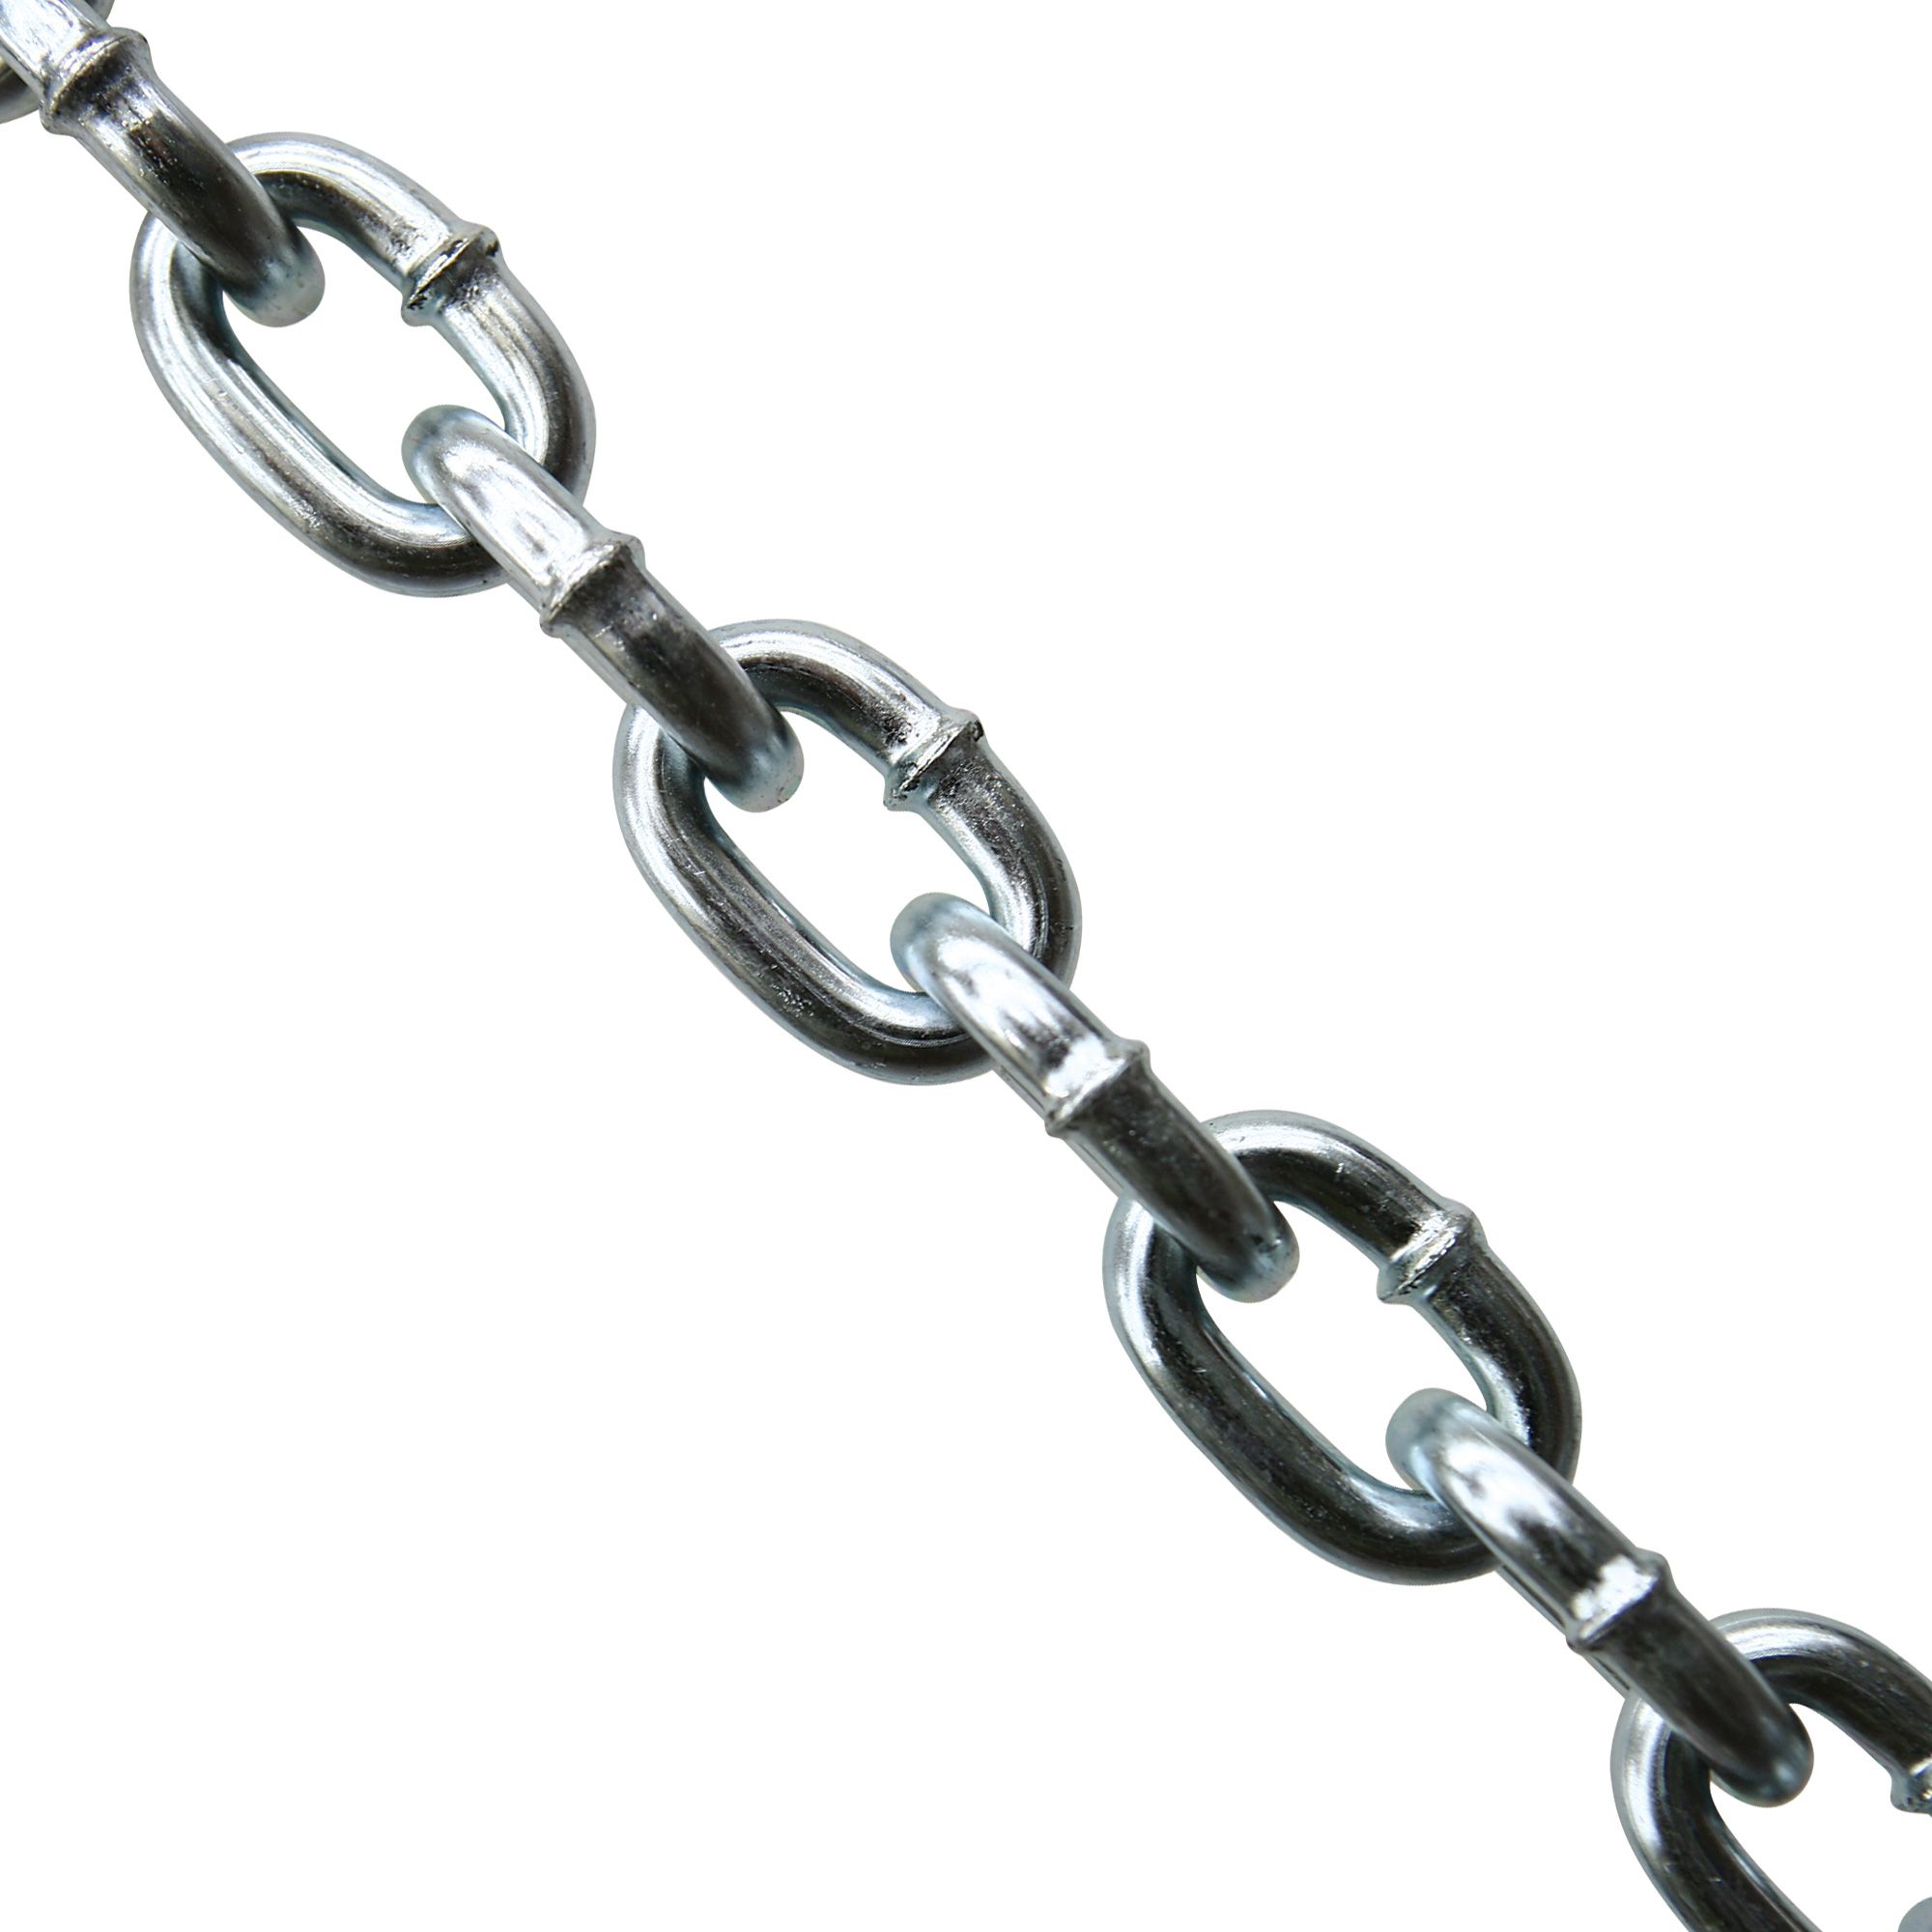 KingChain 698351 3/16 x 15 Zinc Plated Grade 30 Proof Coil Chain 